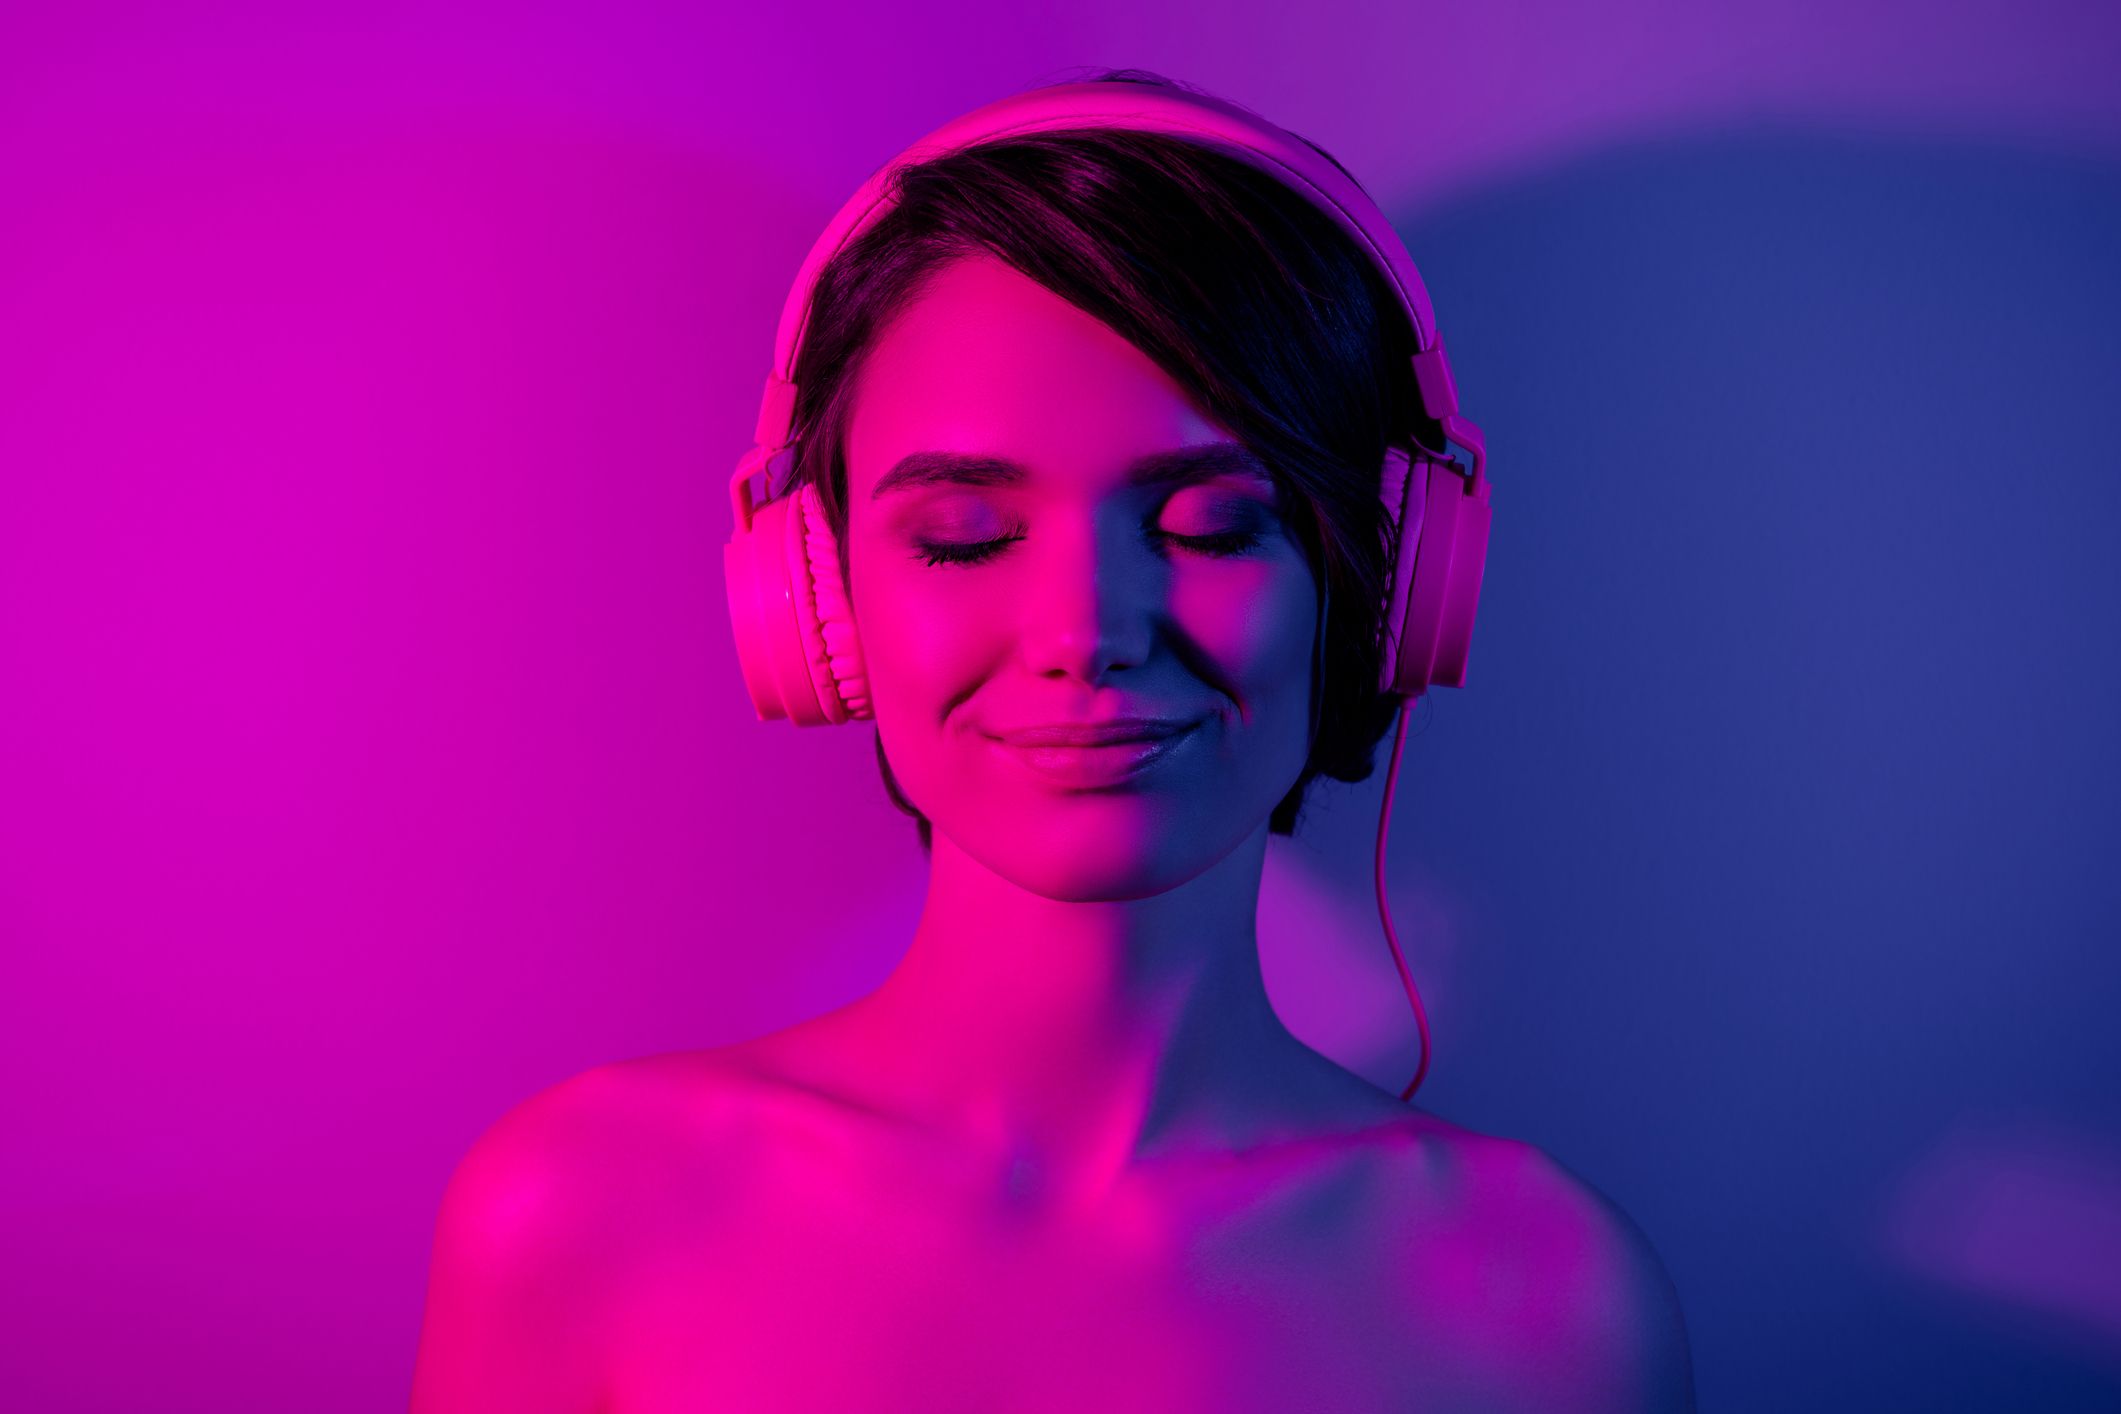 Pornsaudifree - 15 Audio Porn Options and Podcasts